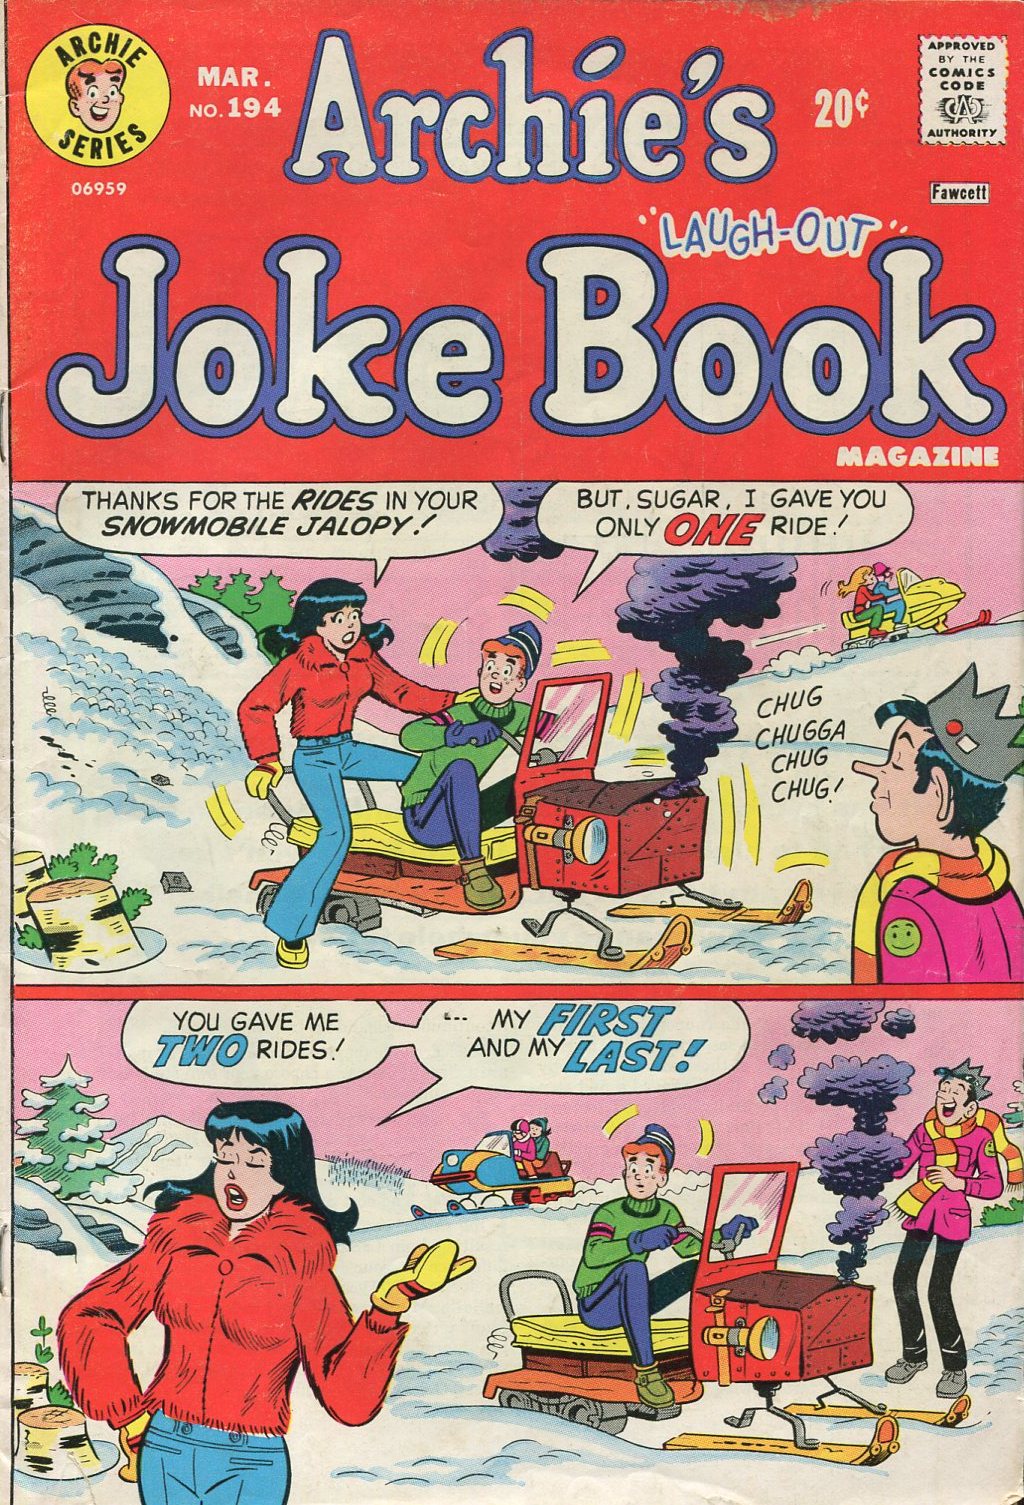 Archie's Joke Book Magazine issue 194 - Page 1